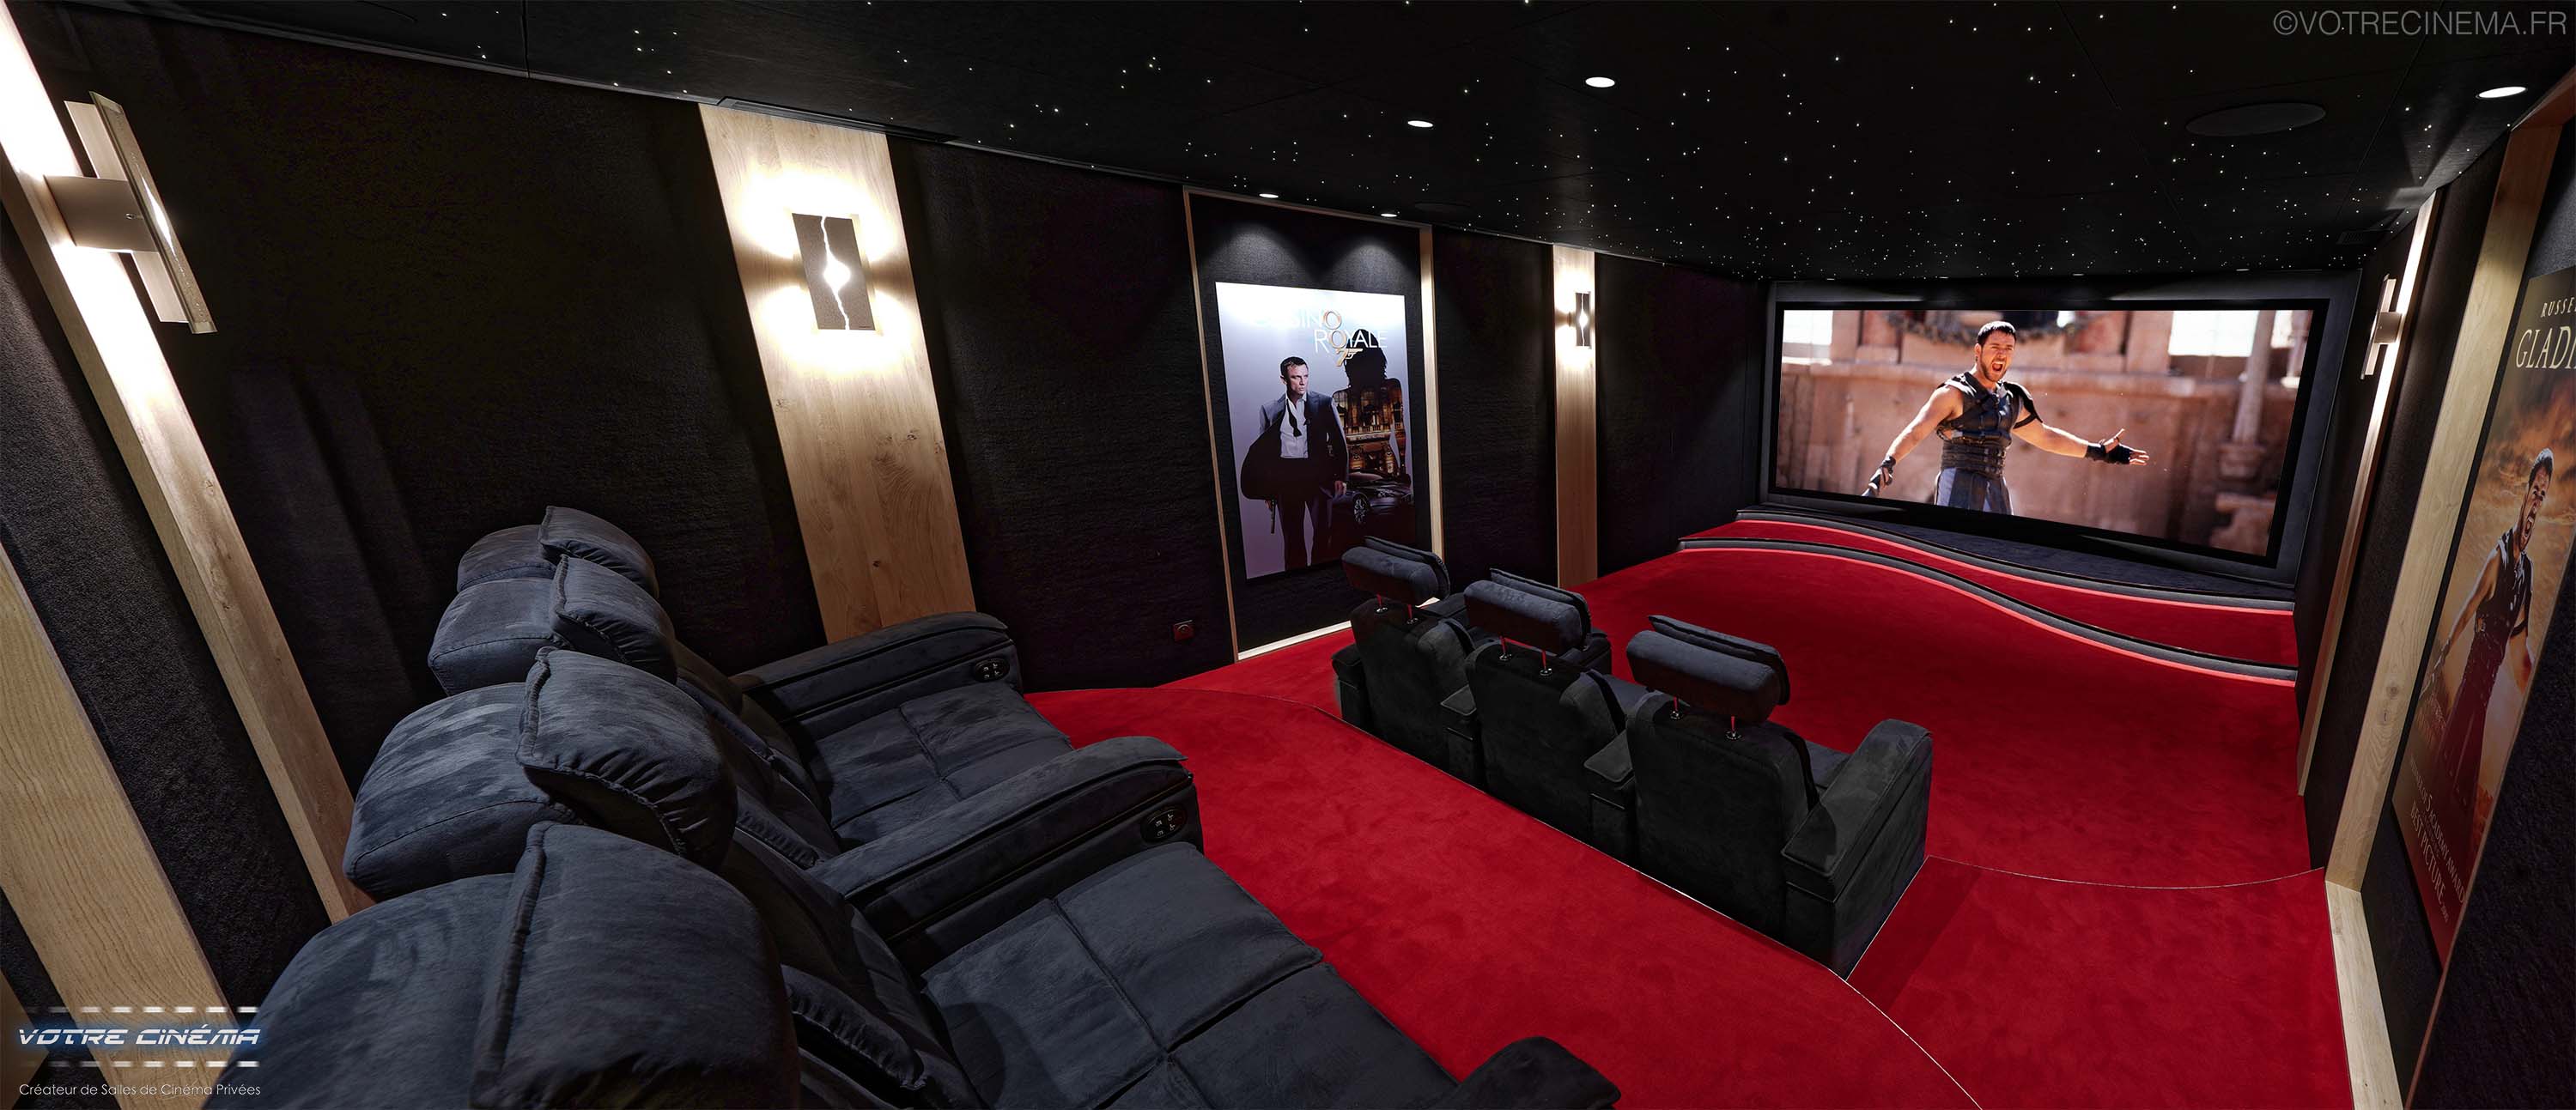 Salle cinéma privée à domicile